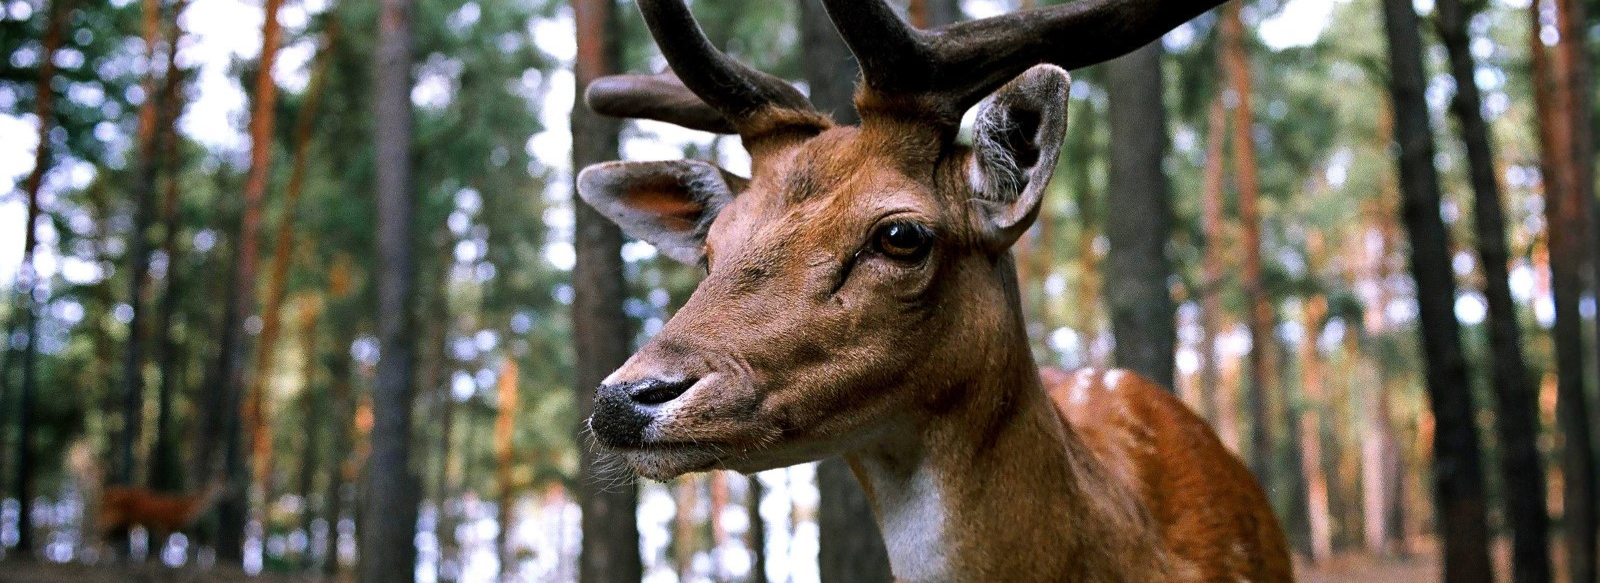 Antlered deer in forest during hunting season